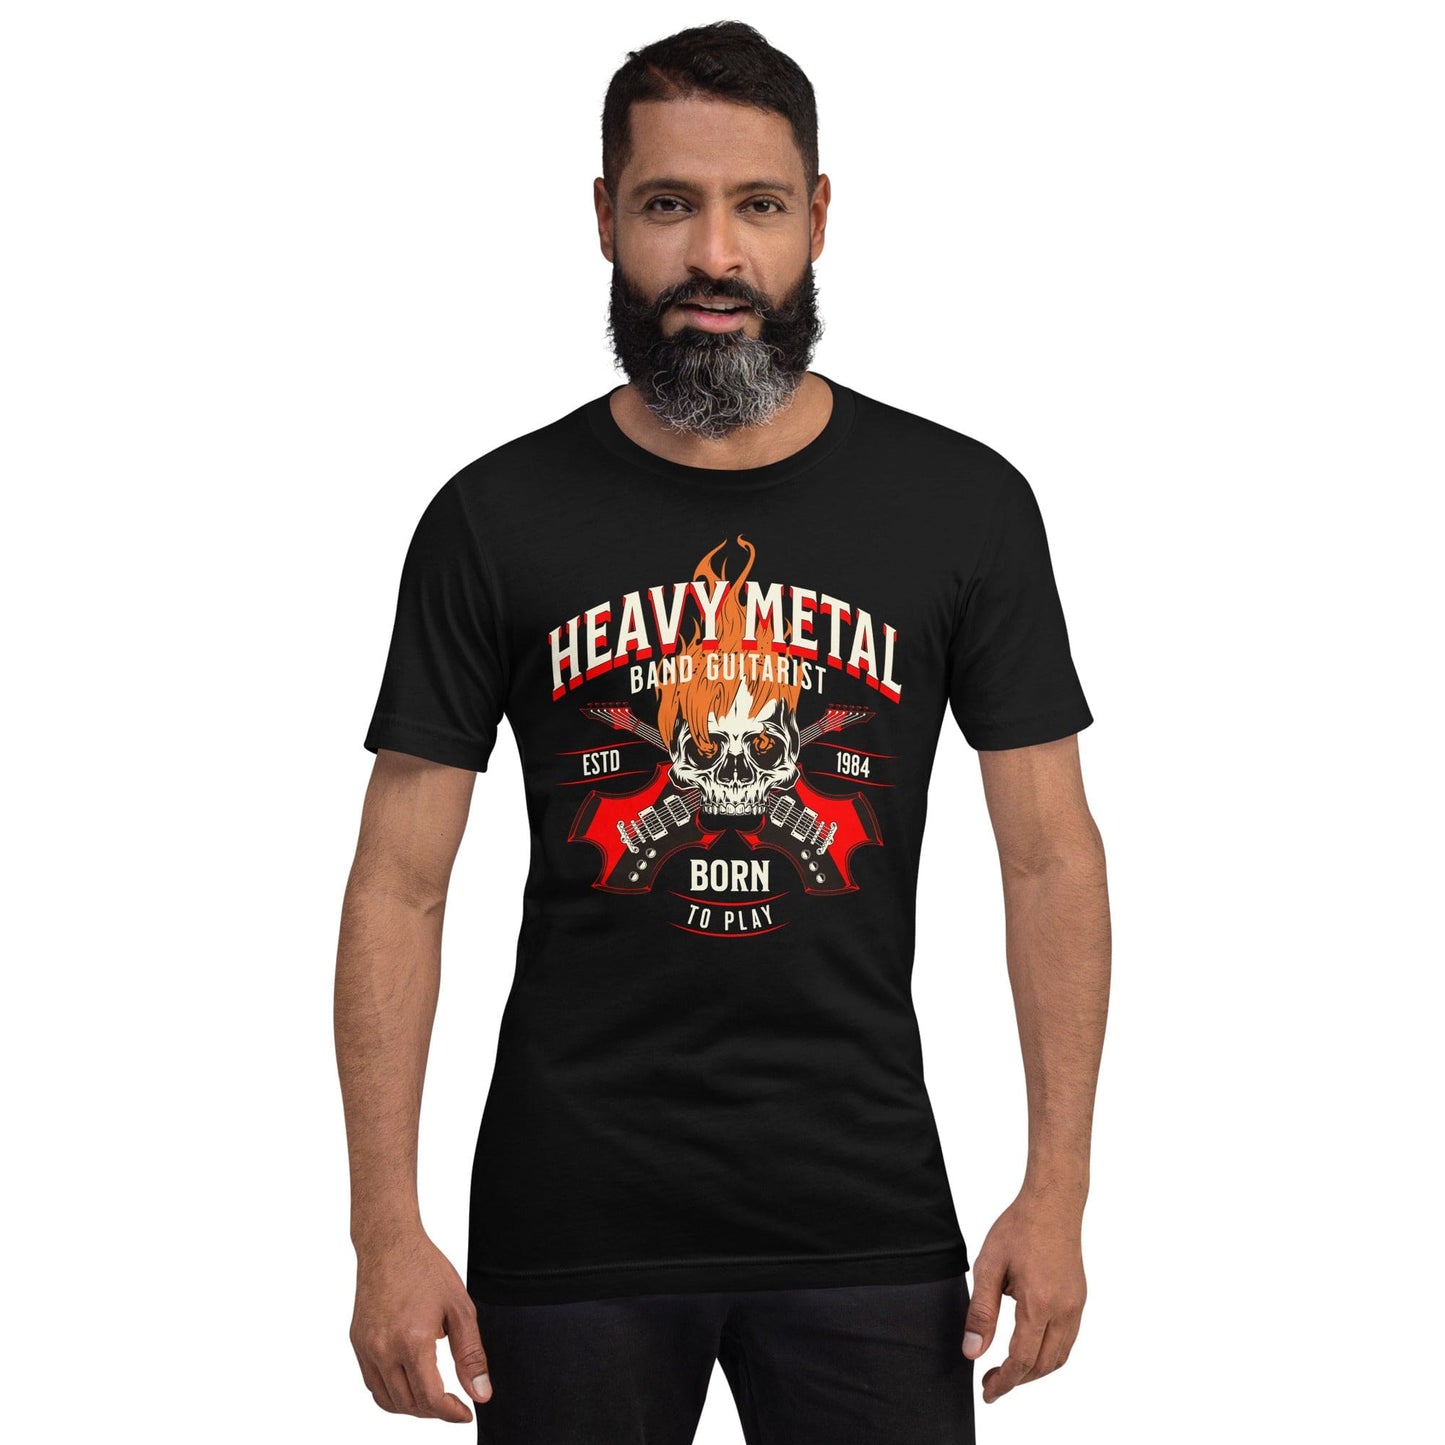 Heavy Metal Guitarist T-shirt